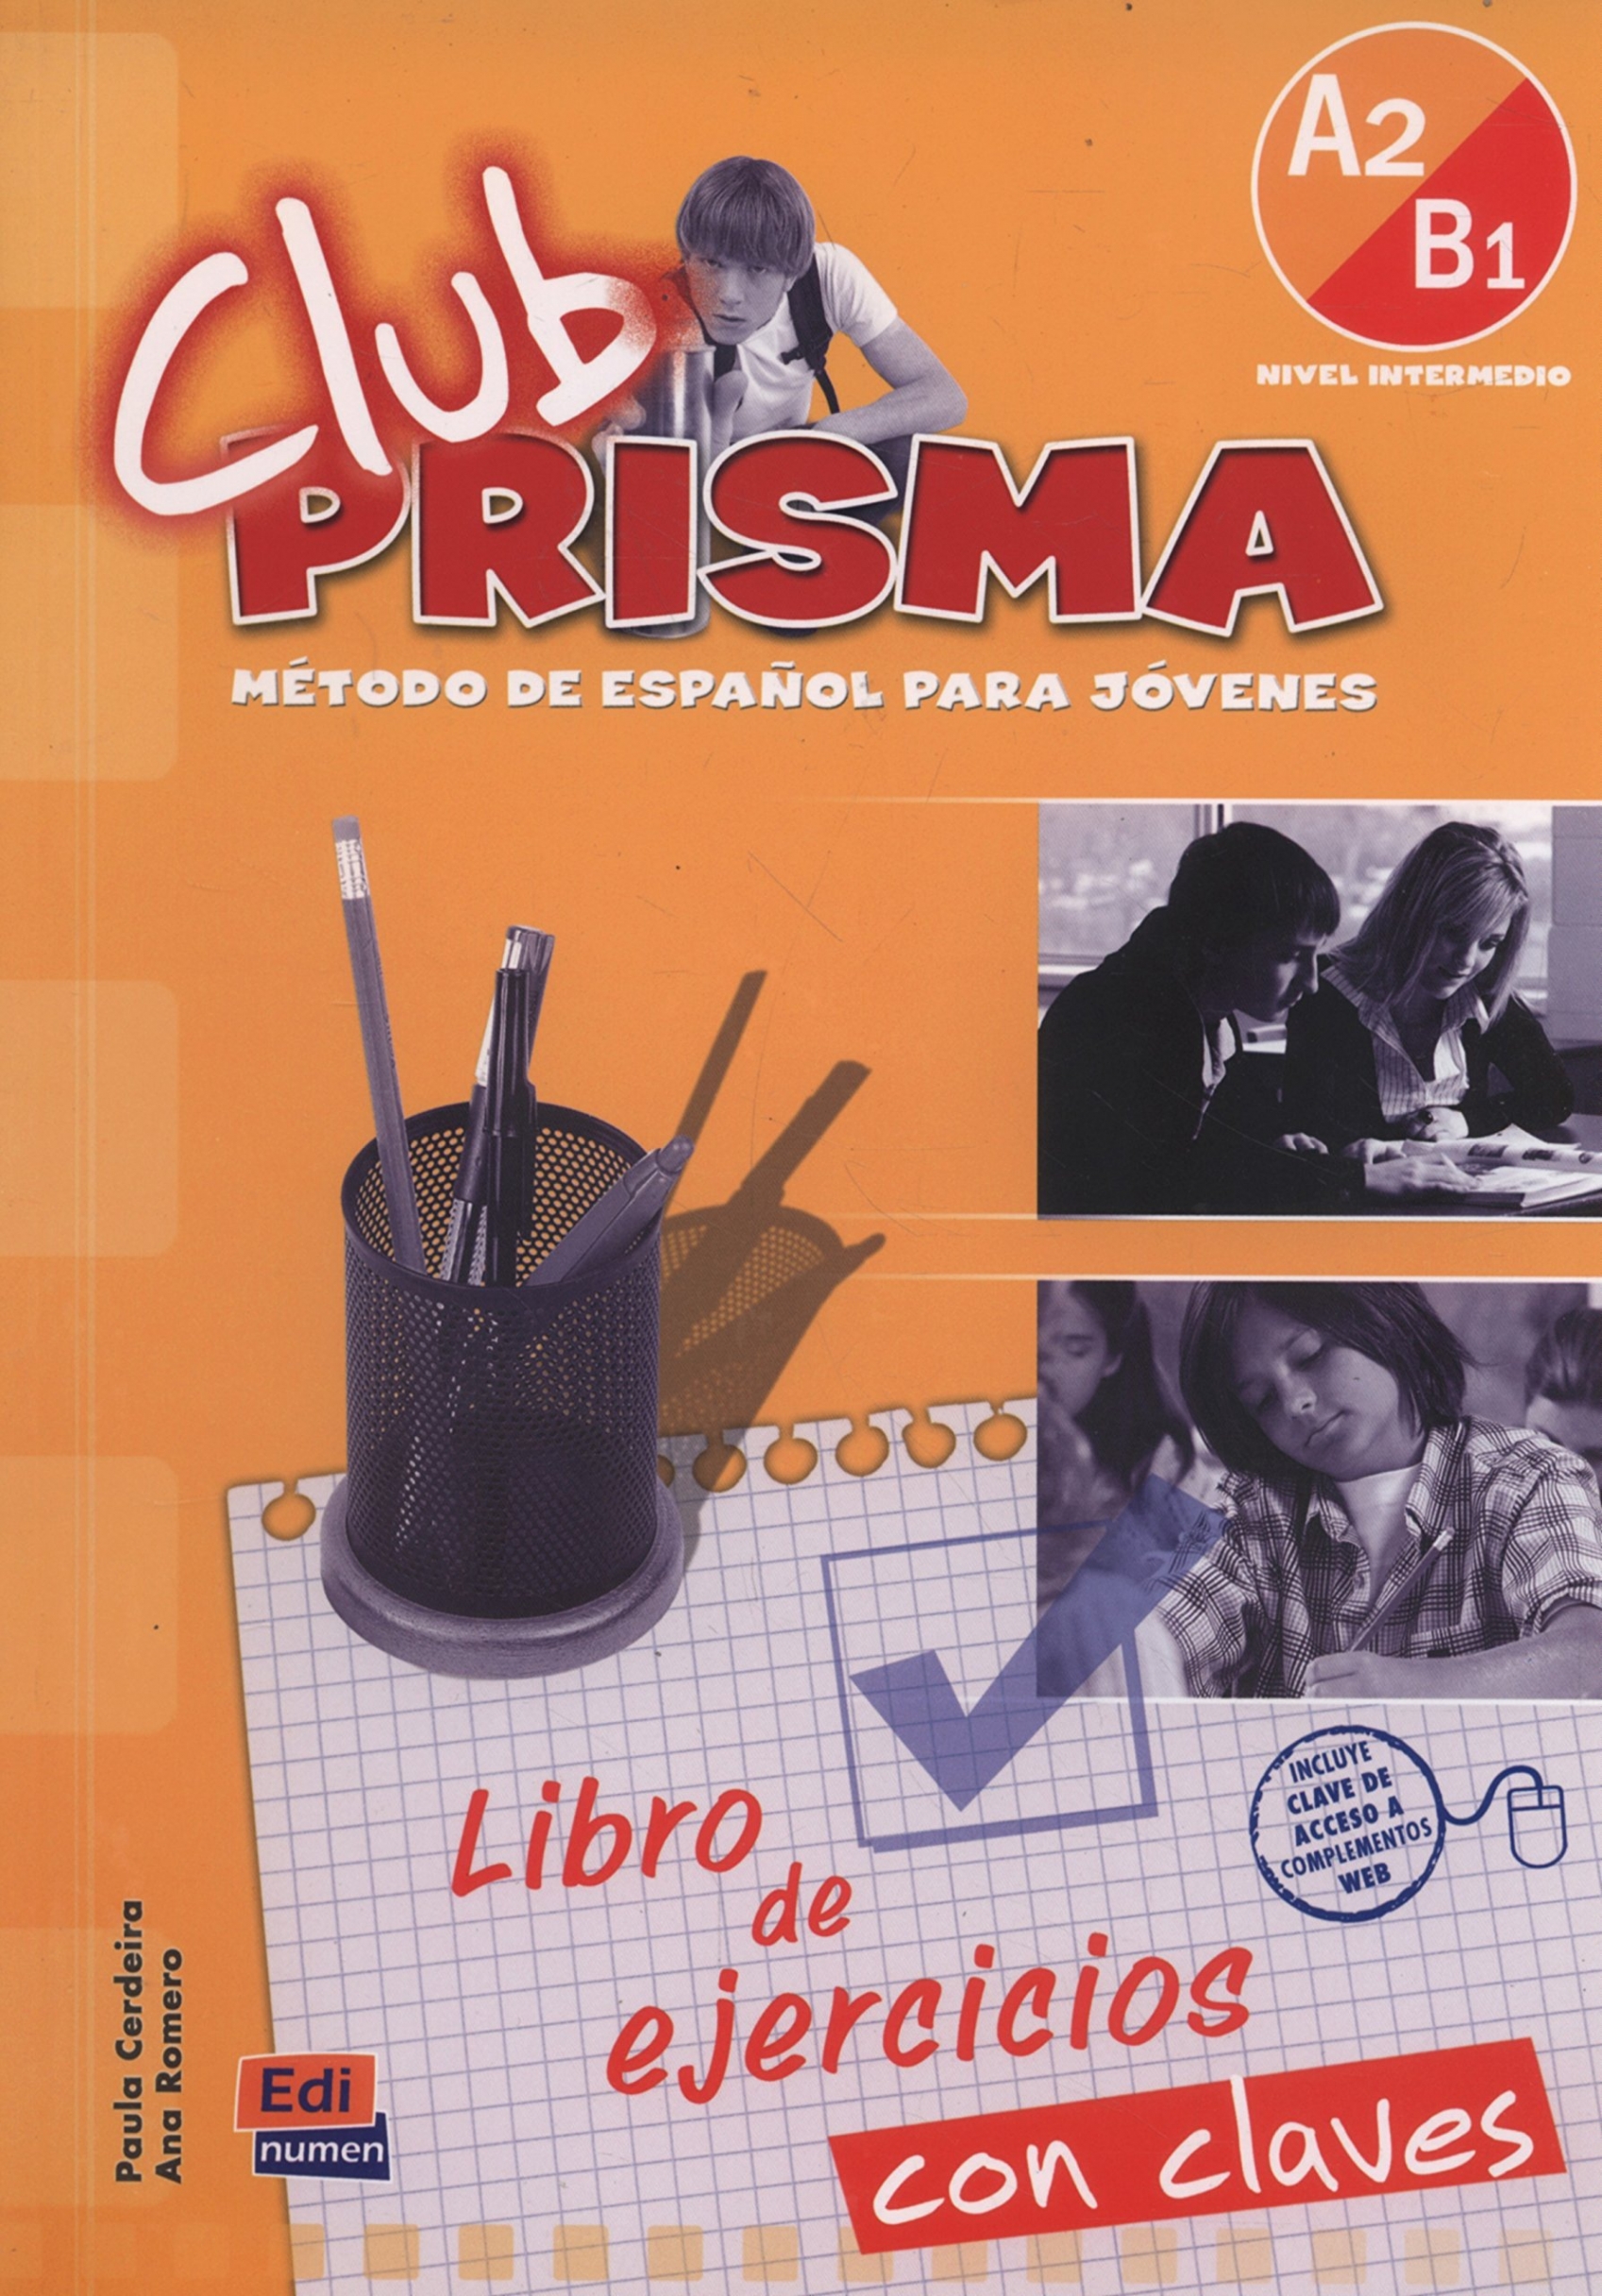  : Maria Jose Gelabert Club Prisma Nivel A2/ B1 - Libro de ejercicios con claves 